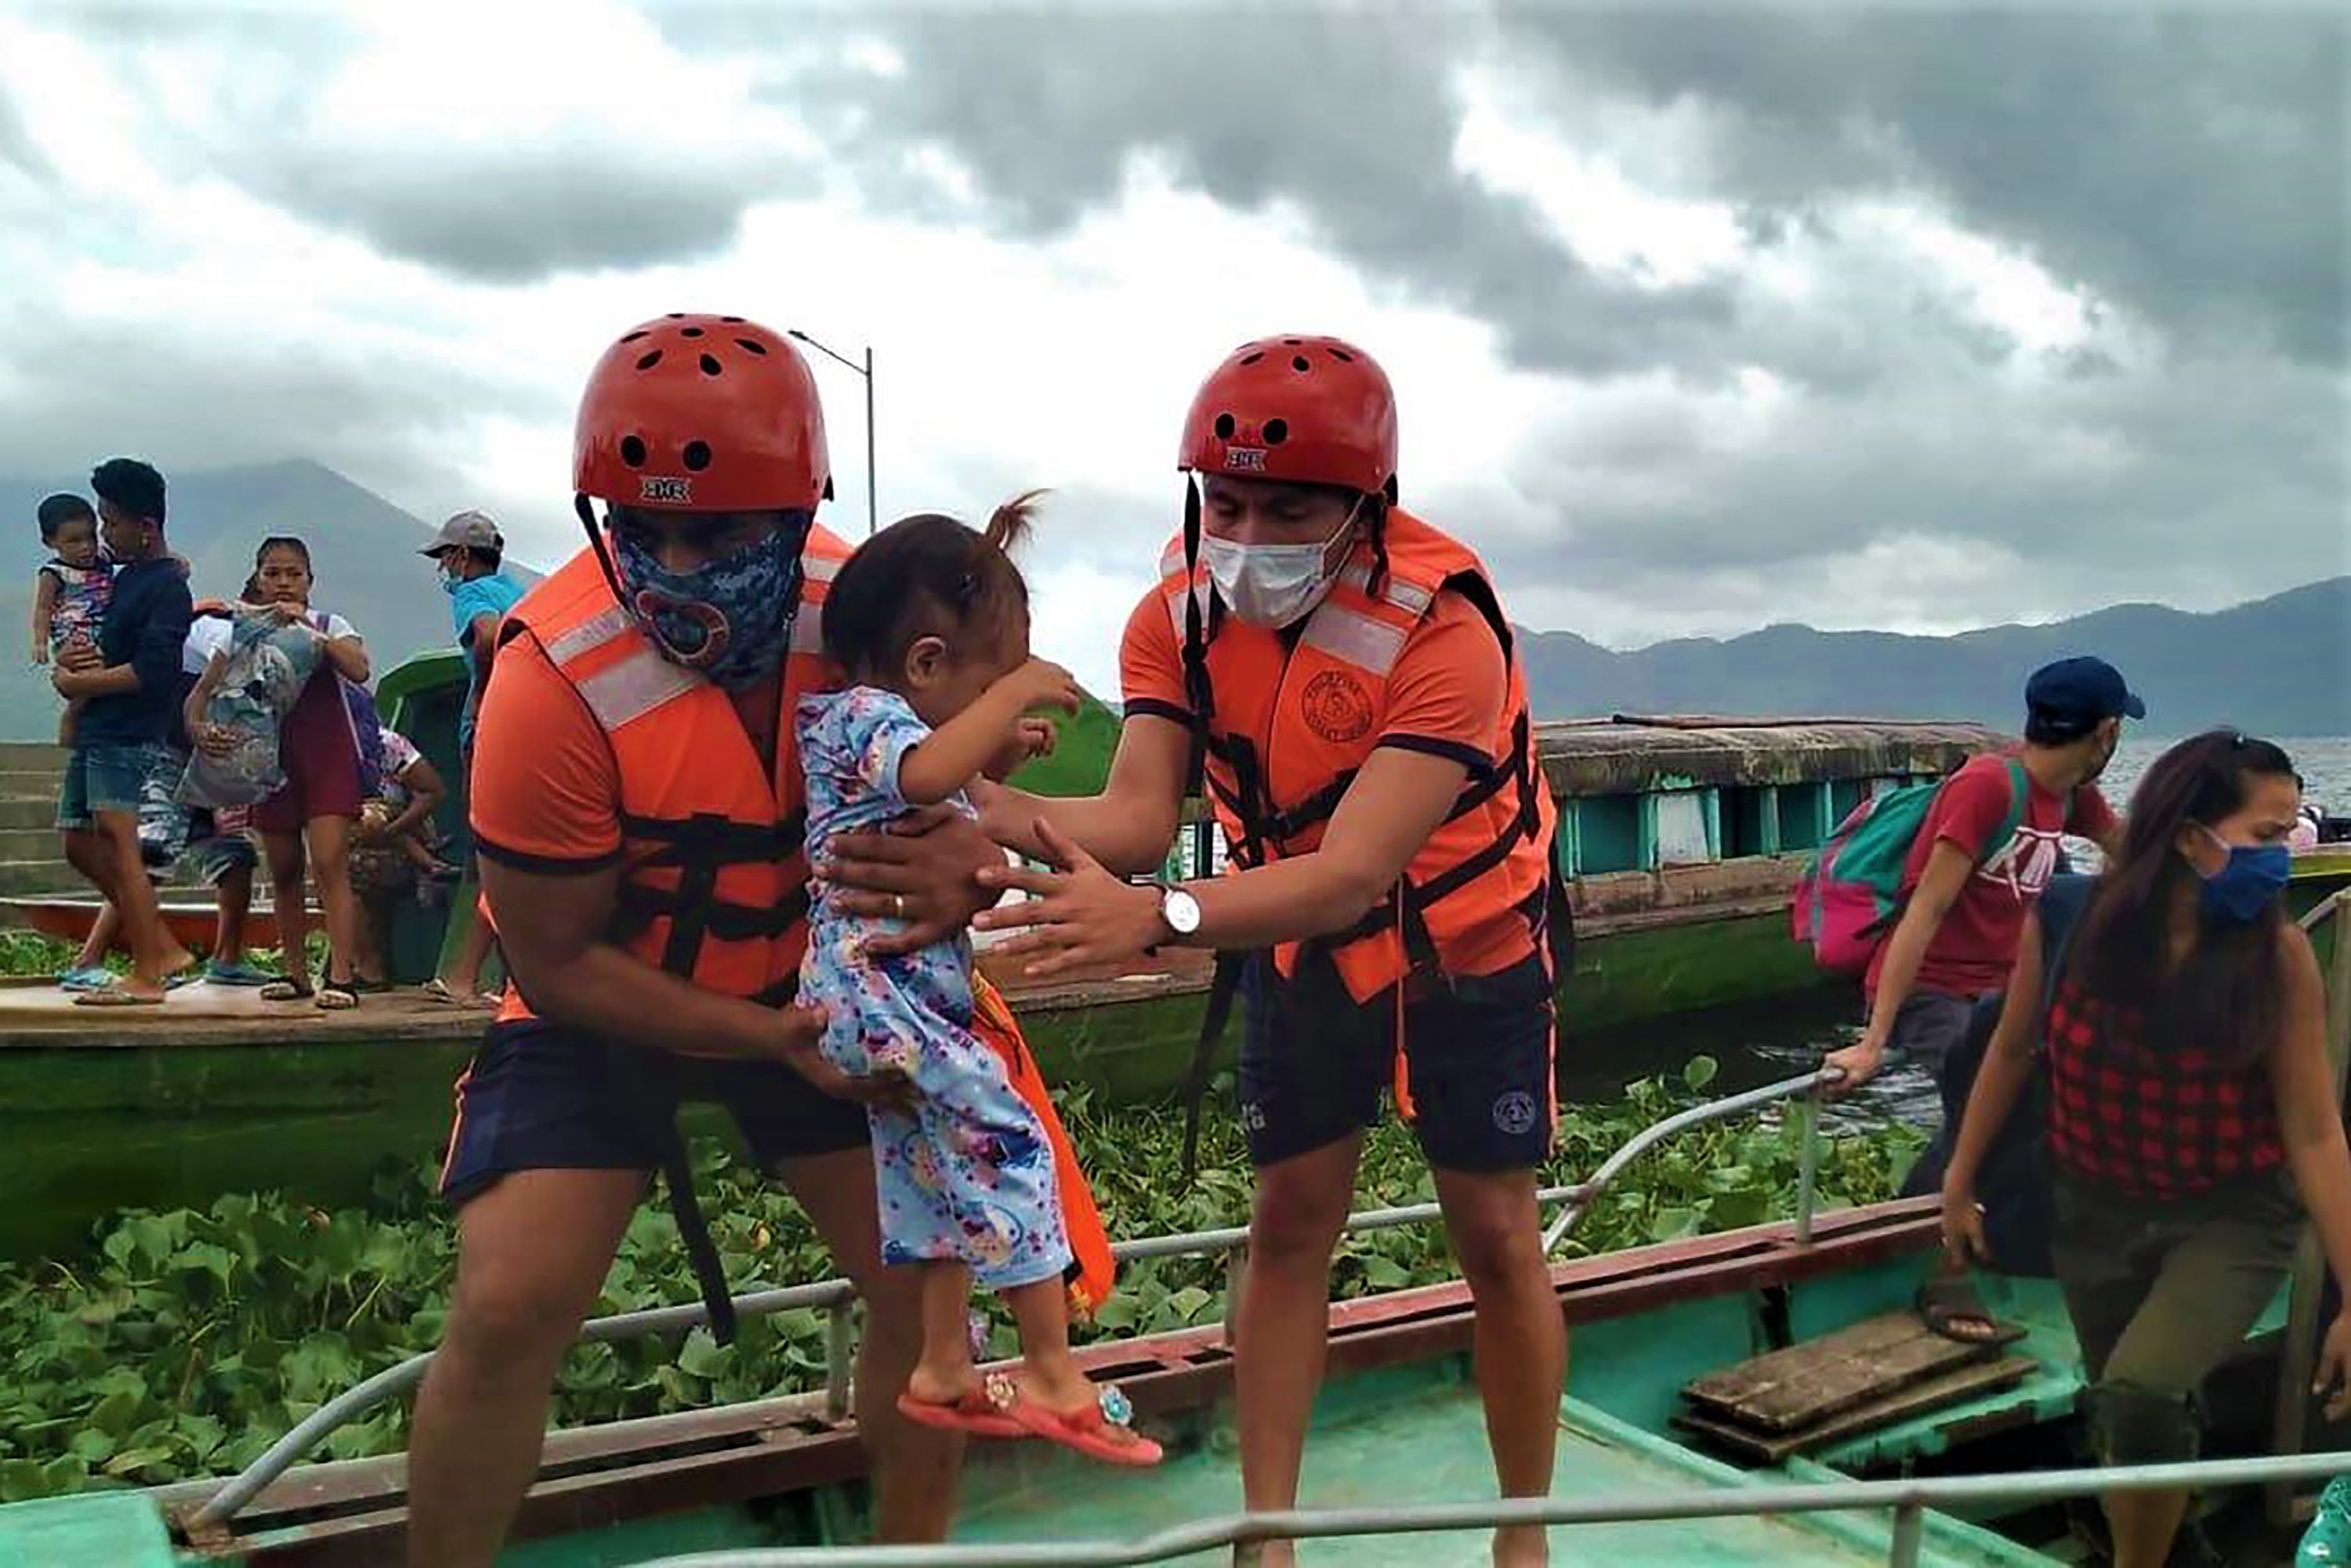 Super typhoon slams into Philippines, 1 million evacuated - The Associated Press